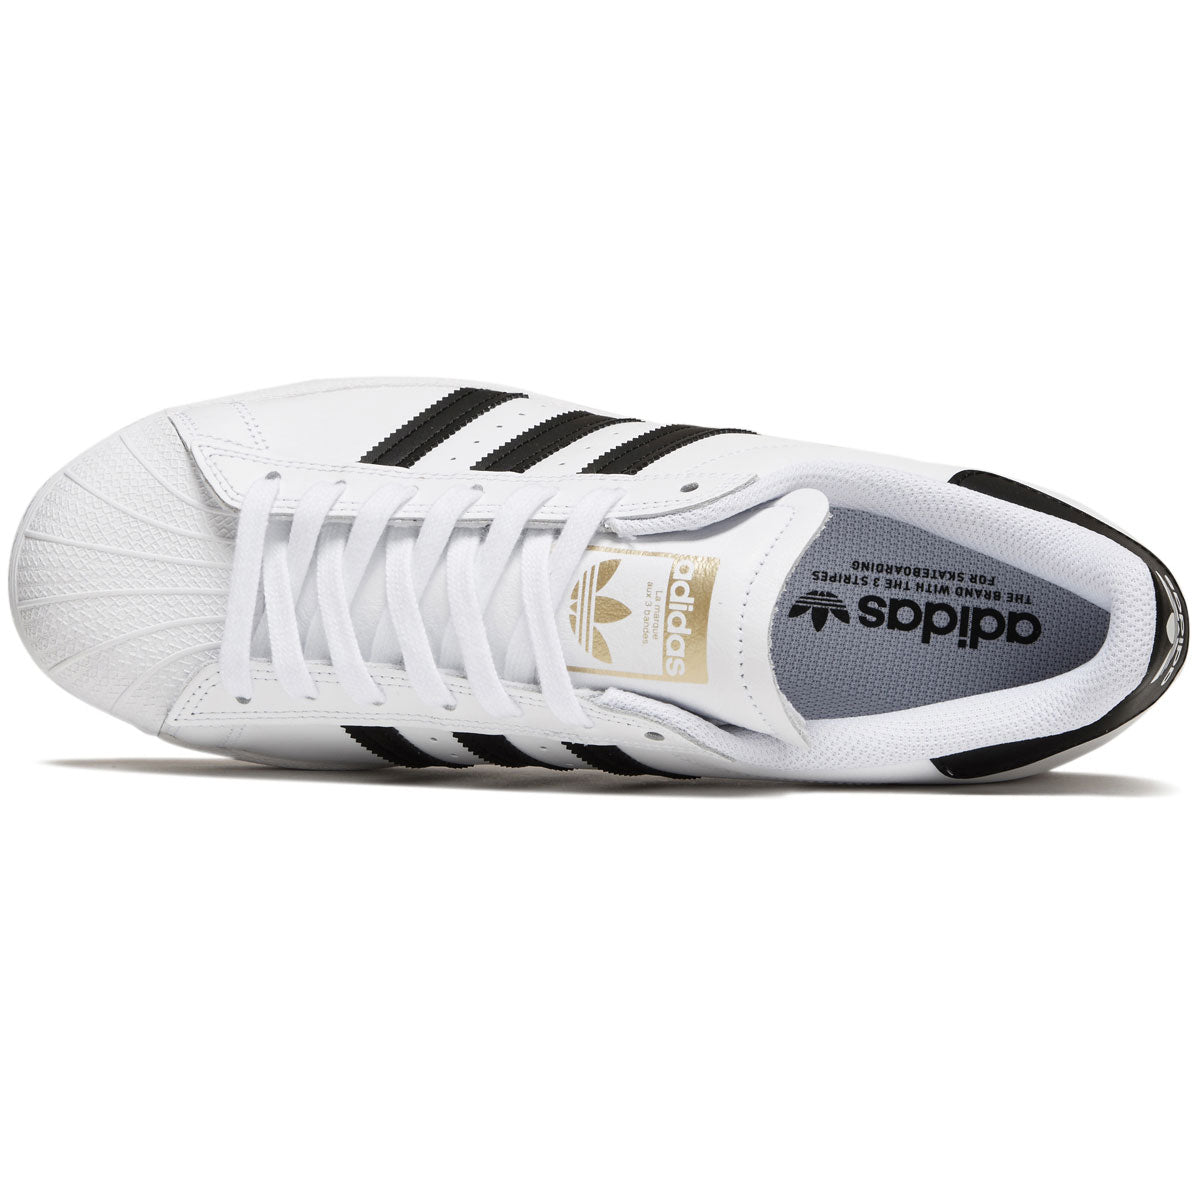 Adidas Superstar Adv Shoes - White/Core Black/White image 3